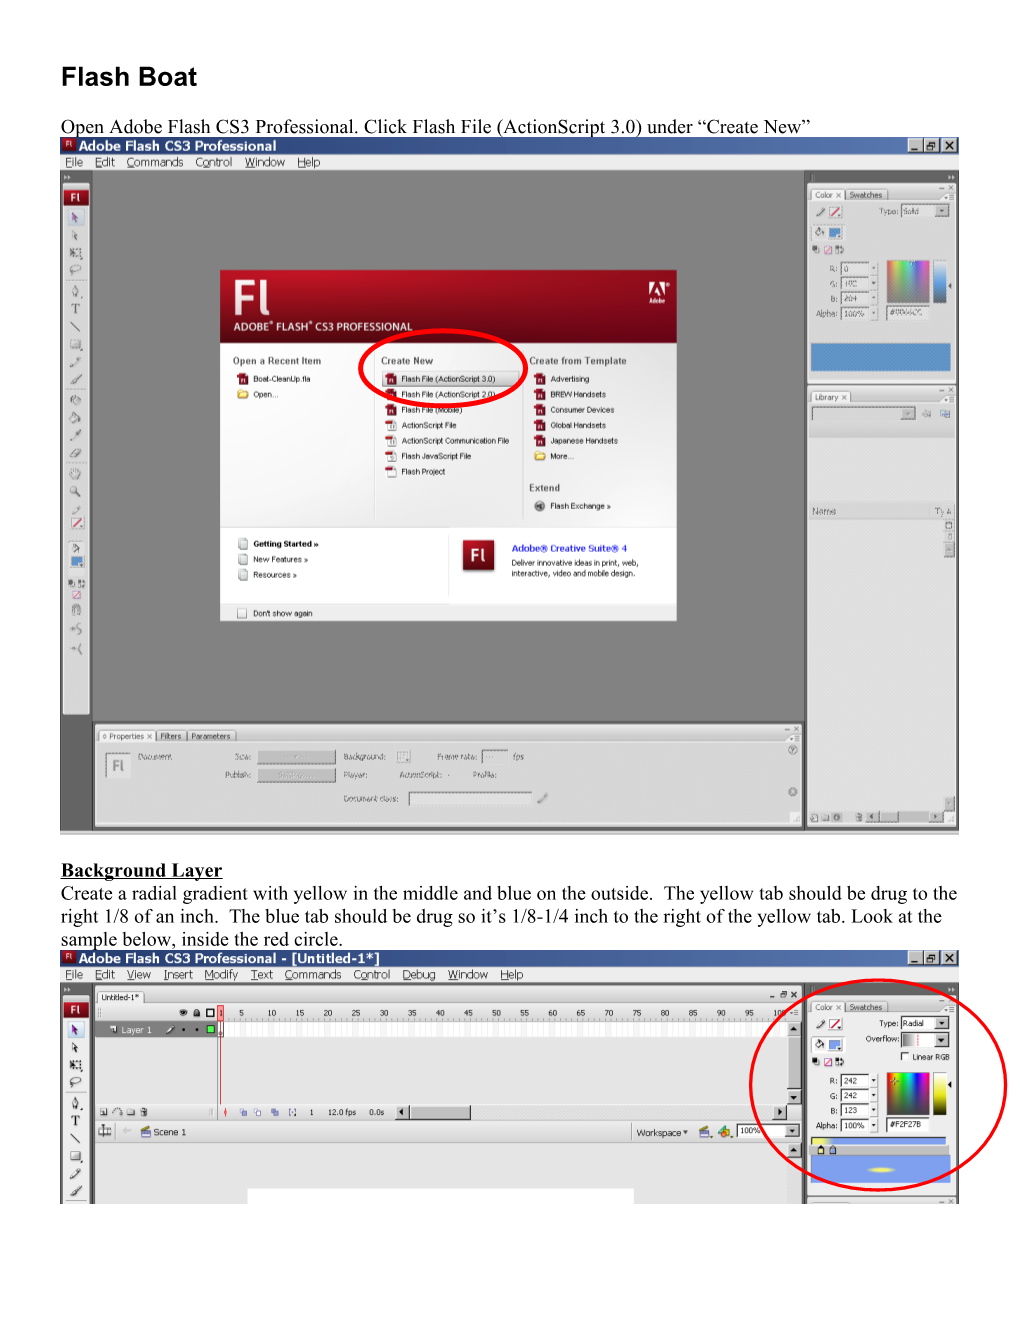 Open Adobe Flash CS3 Professional. Click Flash File (Actionscript 3.0) Under Create New